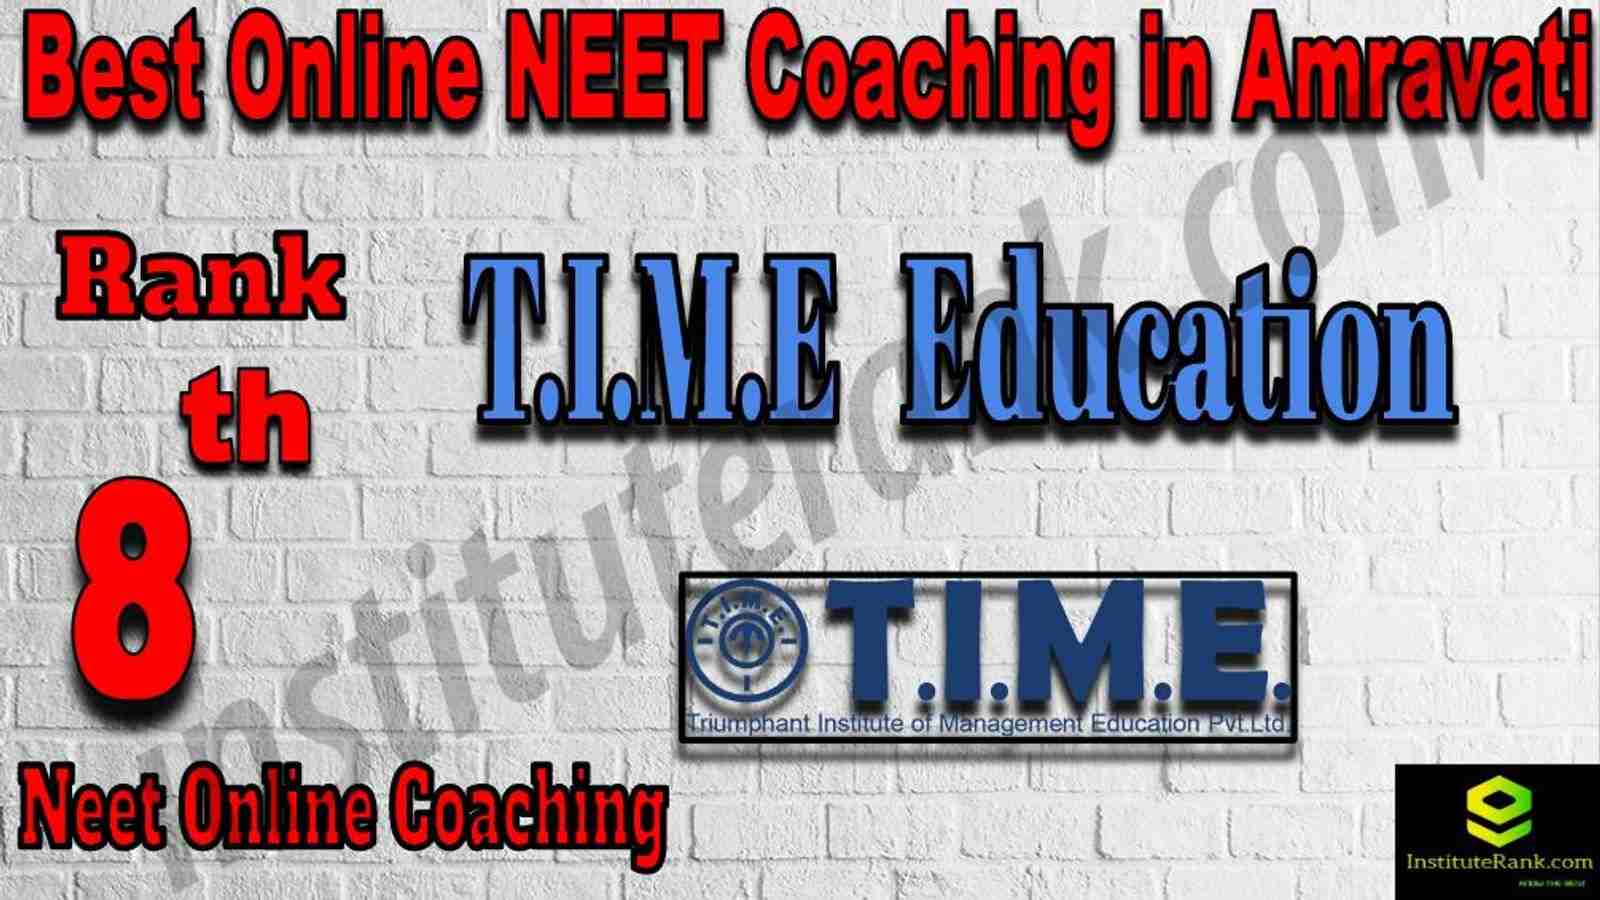 8th Best Online Neet Coaching in Amravati